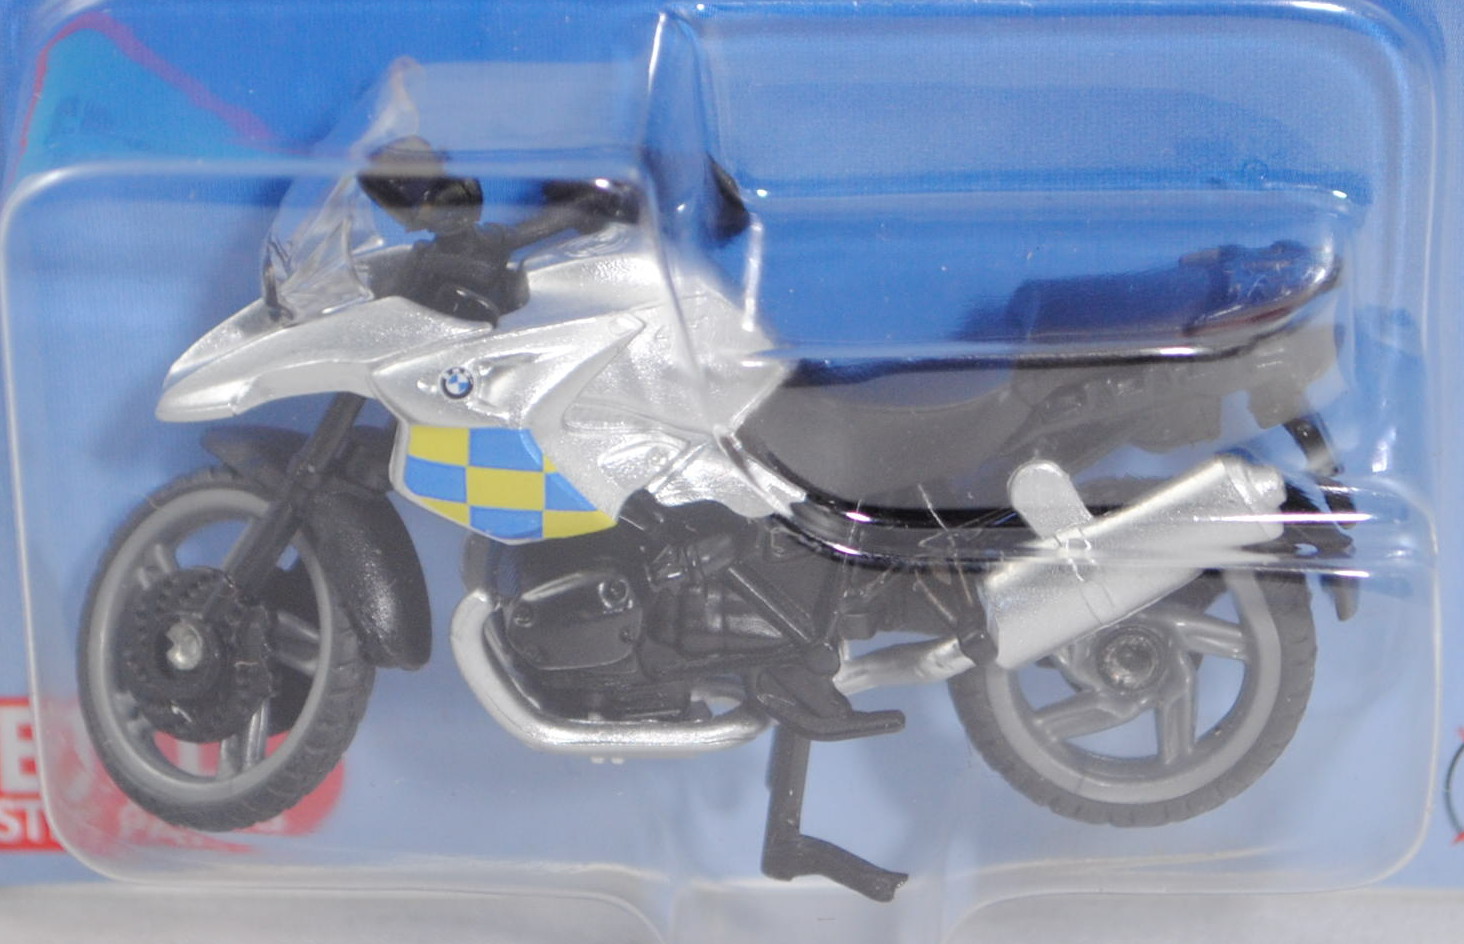 00600 GB BMW R1200 GS (Typ K25, Mod. 04-12) Police Motorbike, weißaluminium, blau/gelbe Karos, P29e